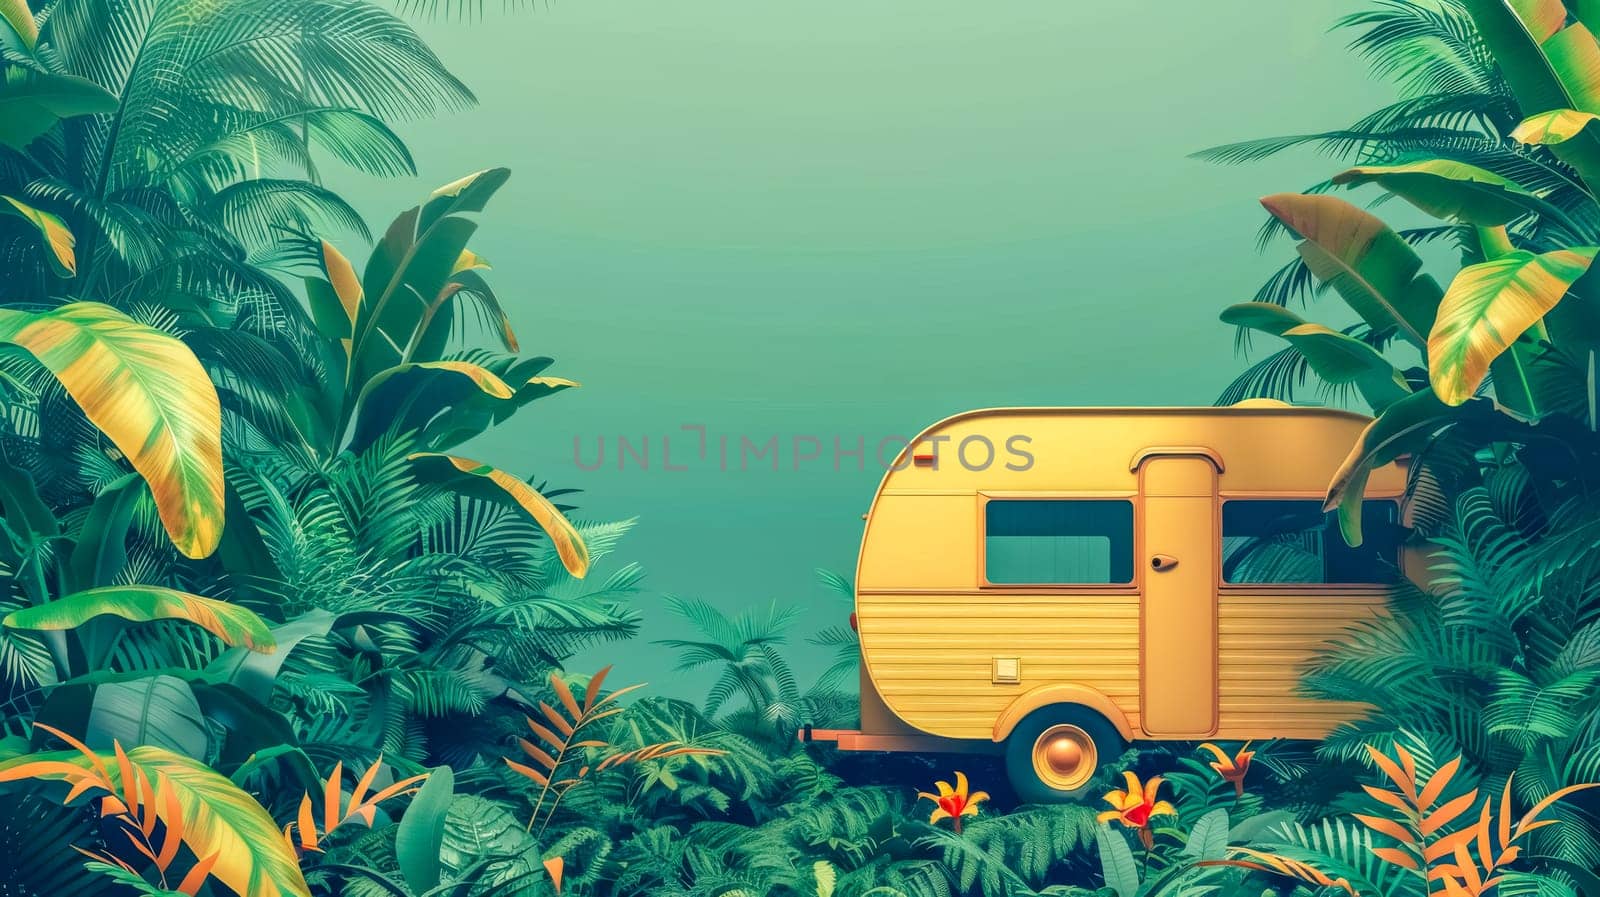 Tropical travel concept with vintage caravan by Edophoto